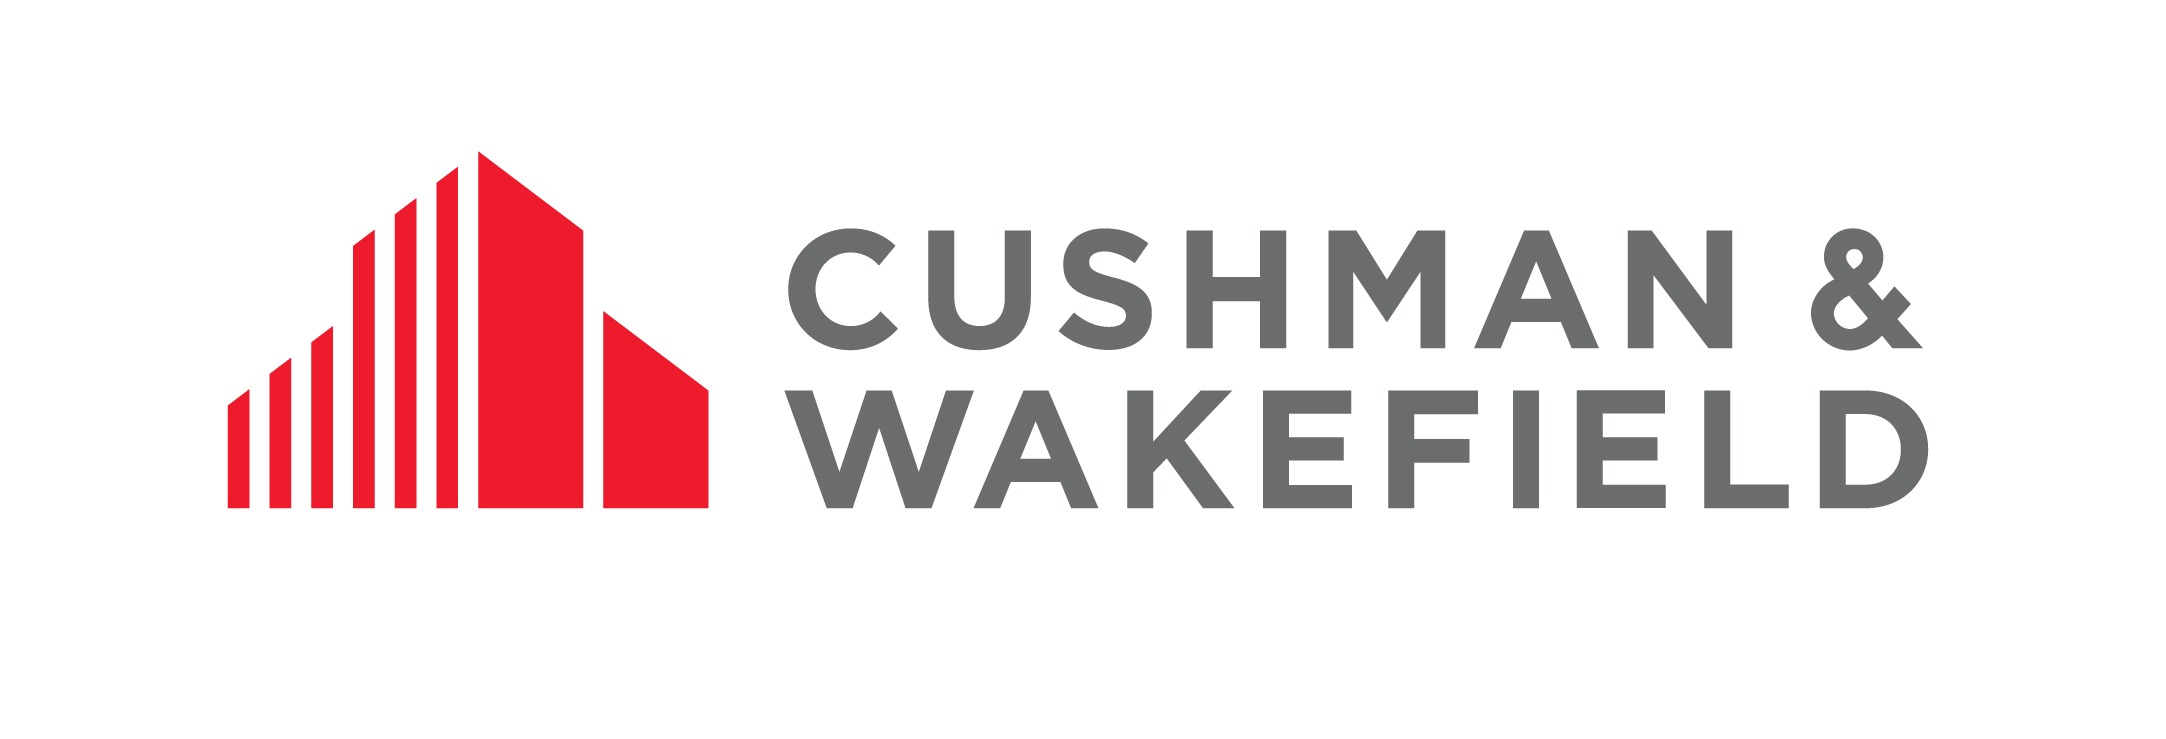 Cushman & Wakefield PR Team